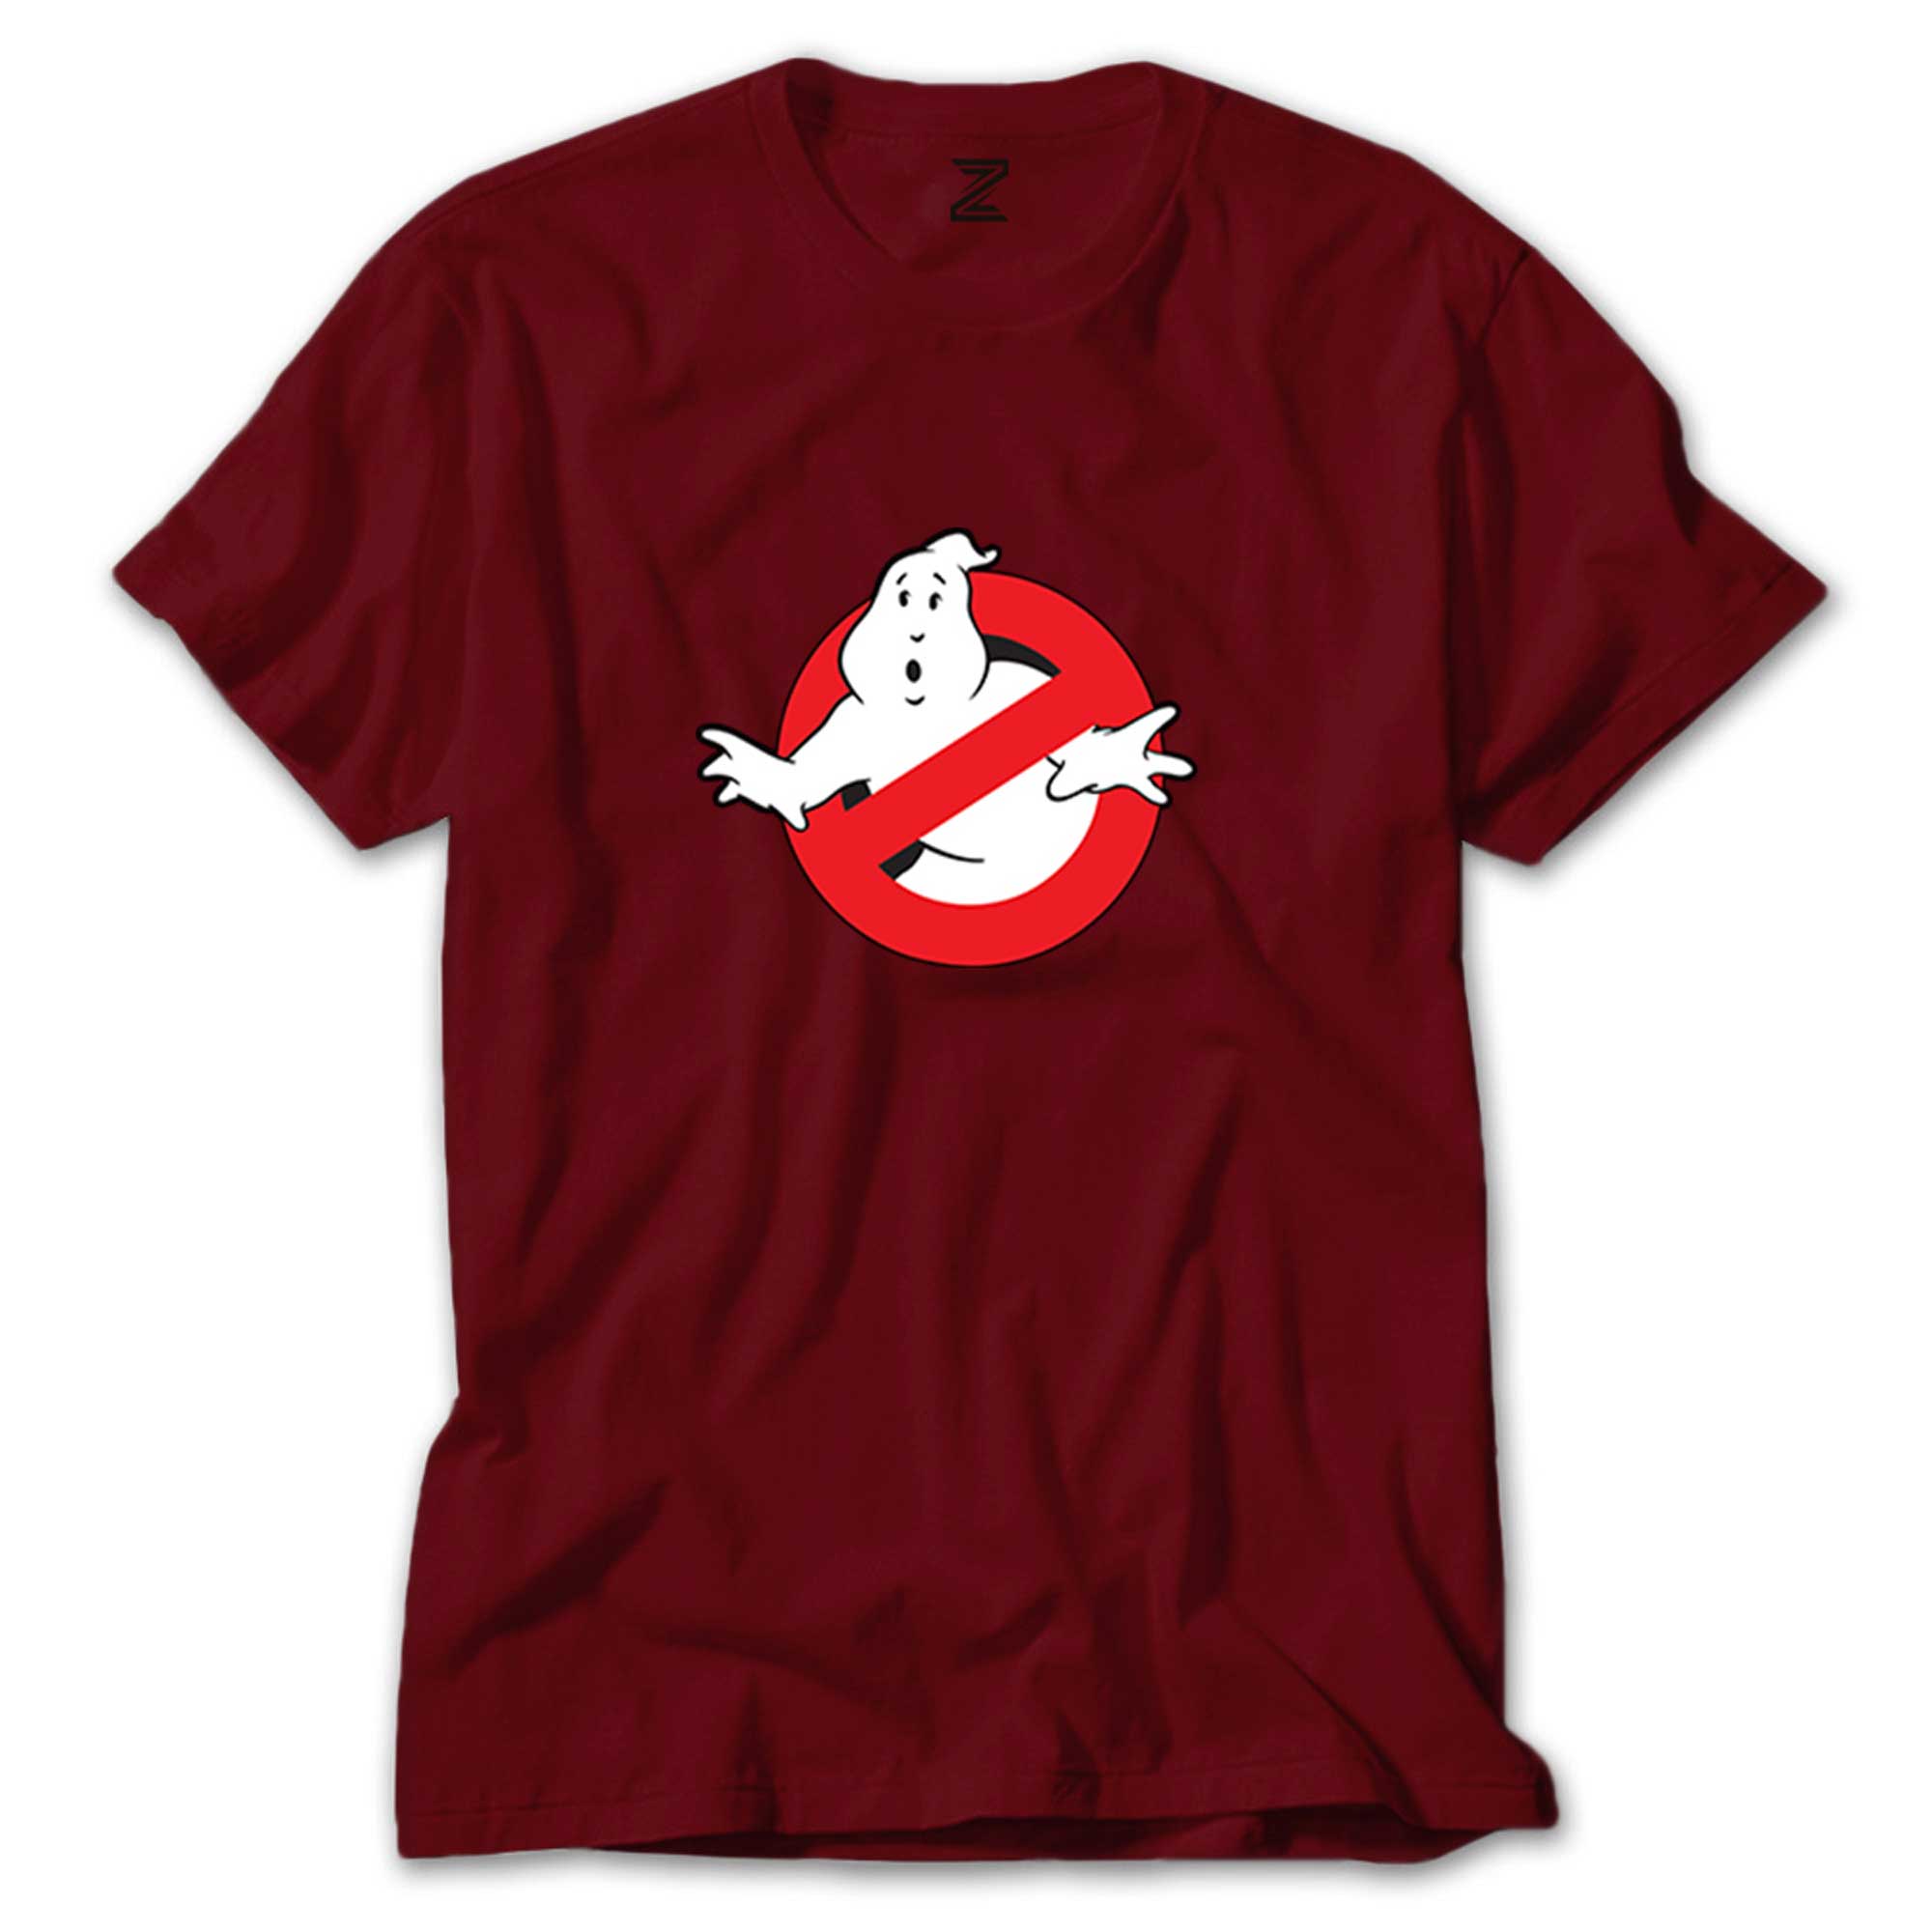 Ghostbusters Light Renkli Tişört